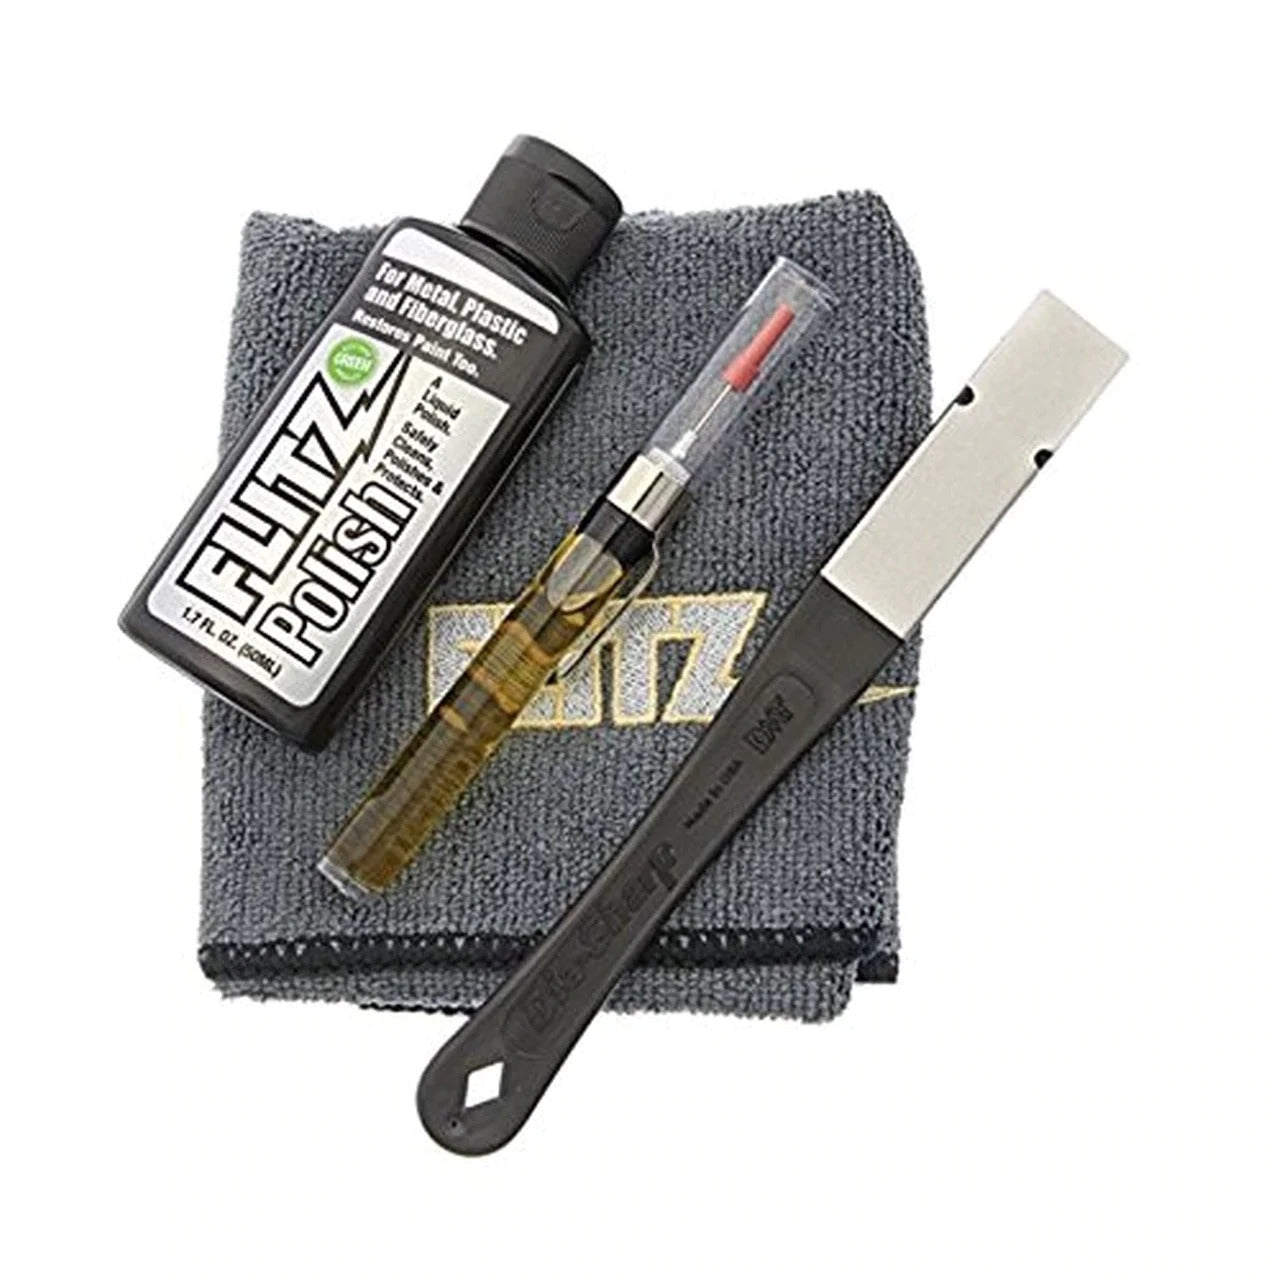 Flitz Knife Restoration Kit Polish + Microfiber + Sharpener + Lubricant #KR41511